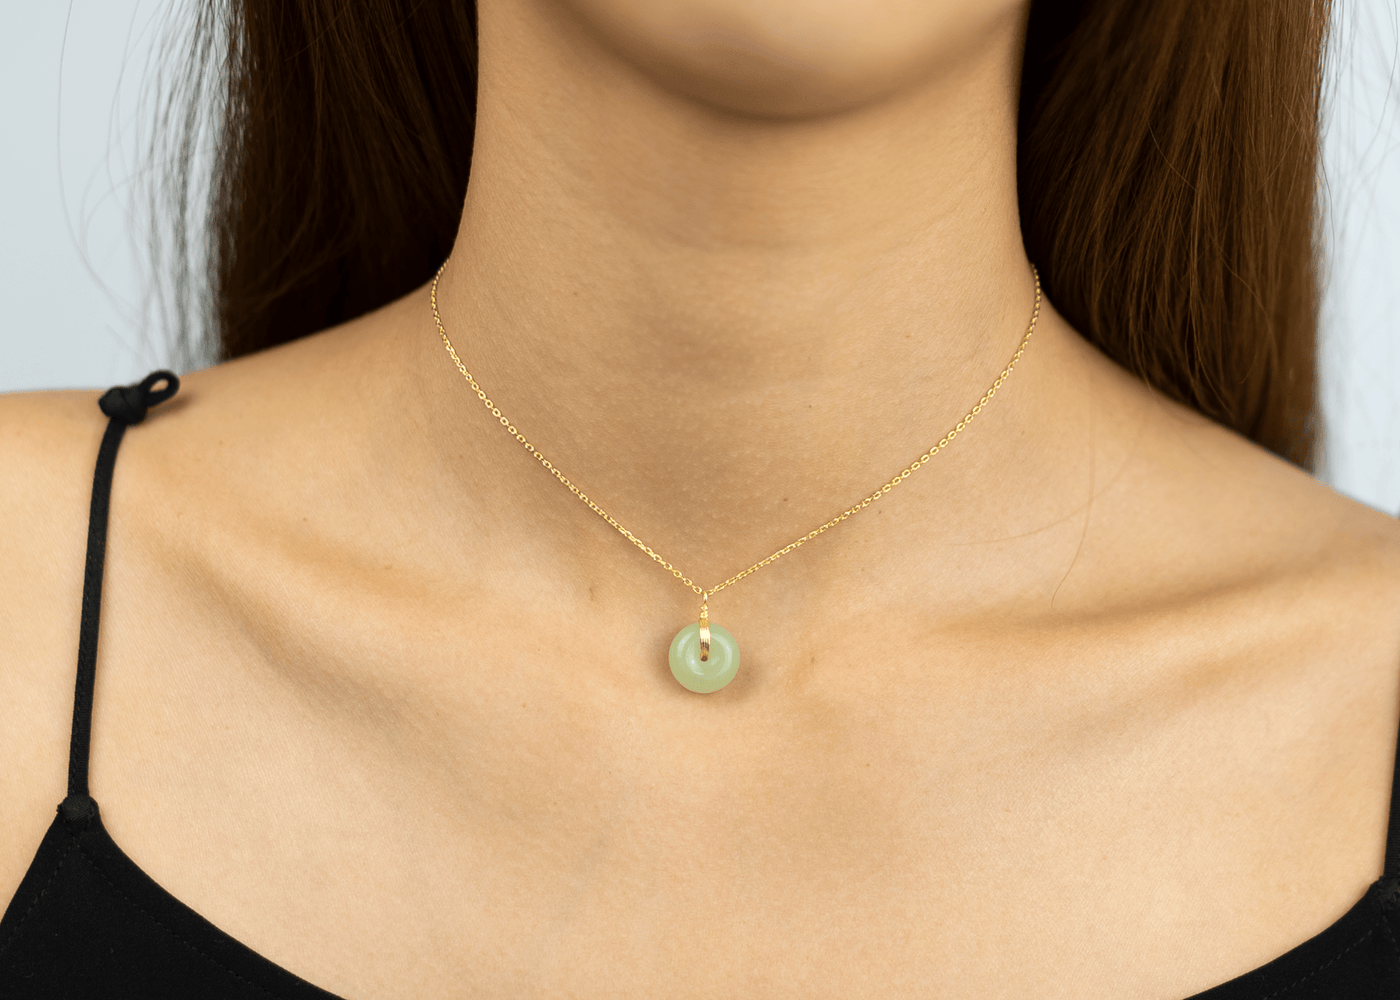 Green Jade Necklace